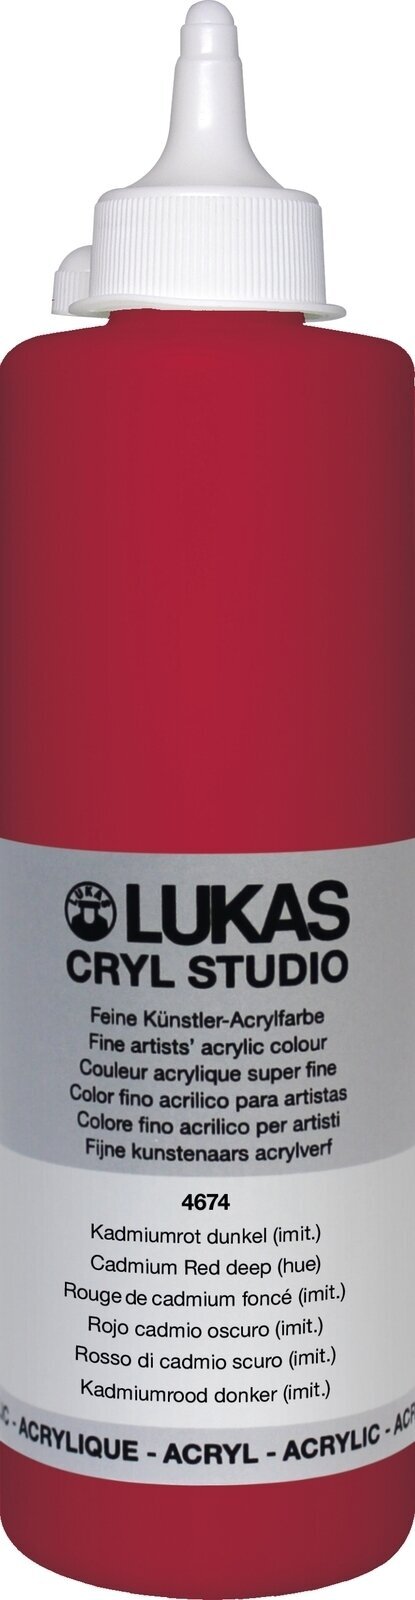 Acrylfarbe Lukas Cryl Studio Acrylfarbe 500 ml Cadmium Red Deep Hue